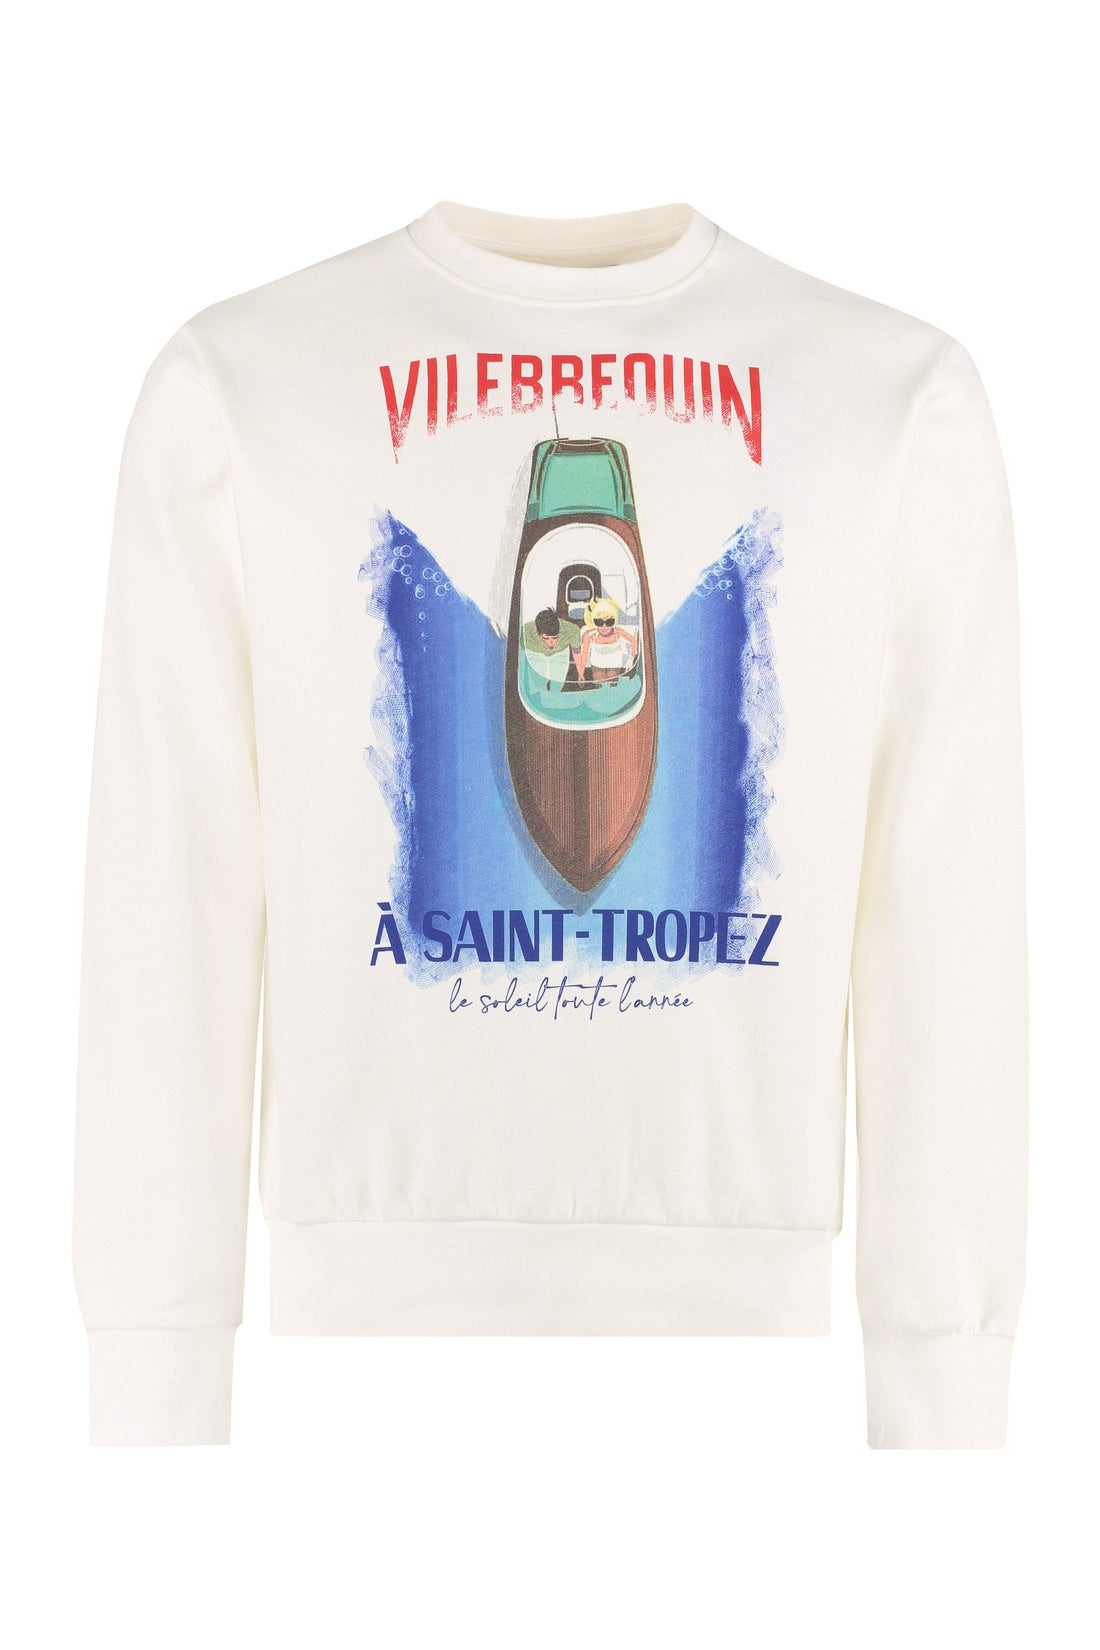 Vilebrequin-OUTLET-SALE-Printed cotton sweatshirt-ARCHIVIST